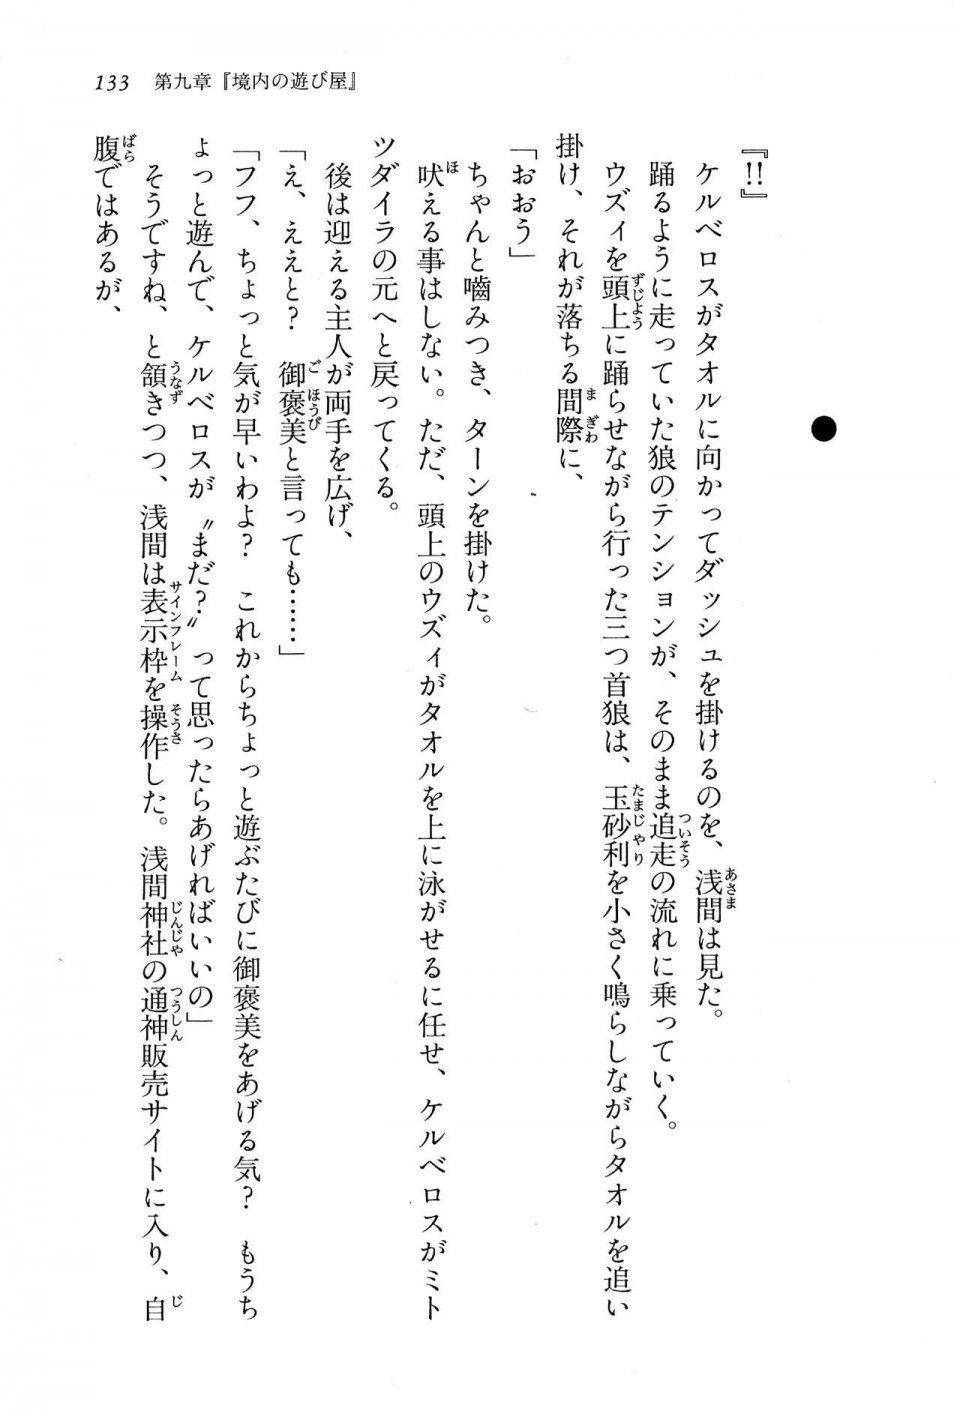 Kyoukai Senjou no Horizon BD Special Mininovel Vol 6(3B) - Photo #137